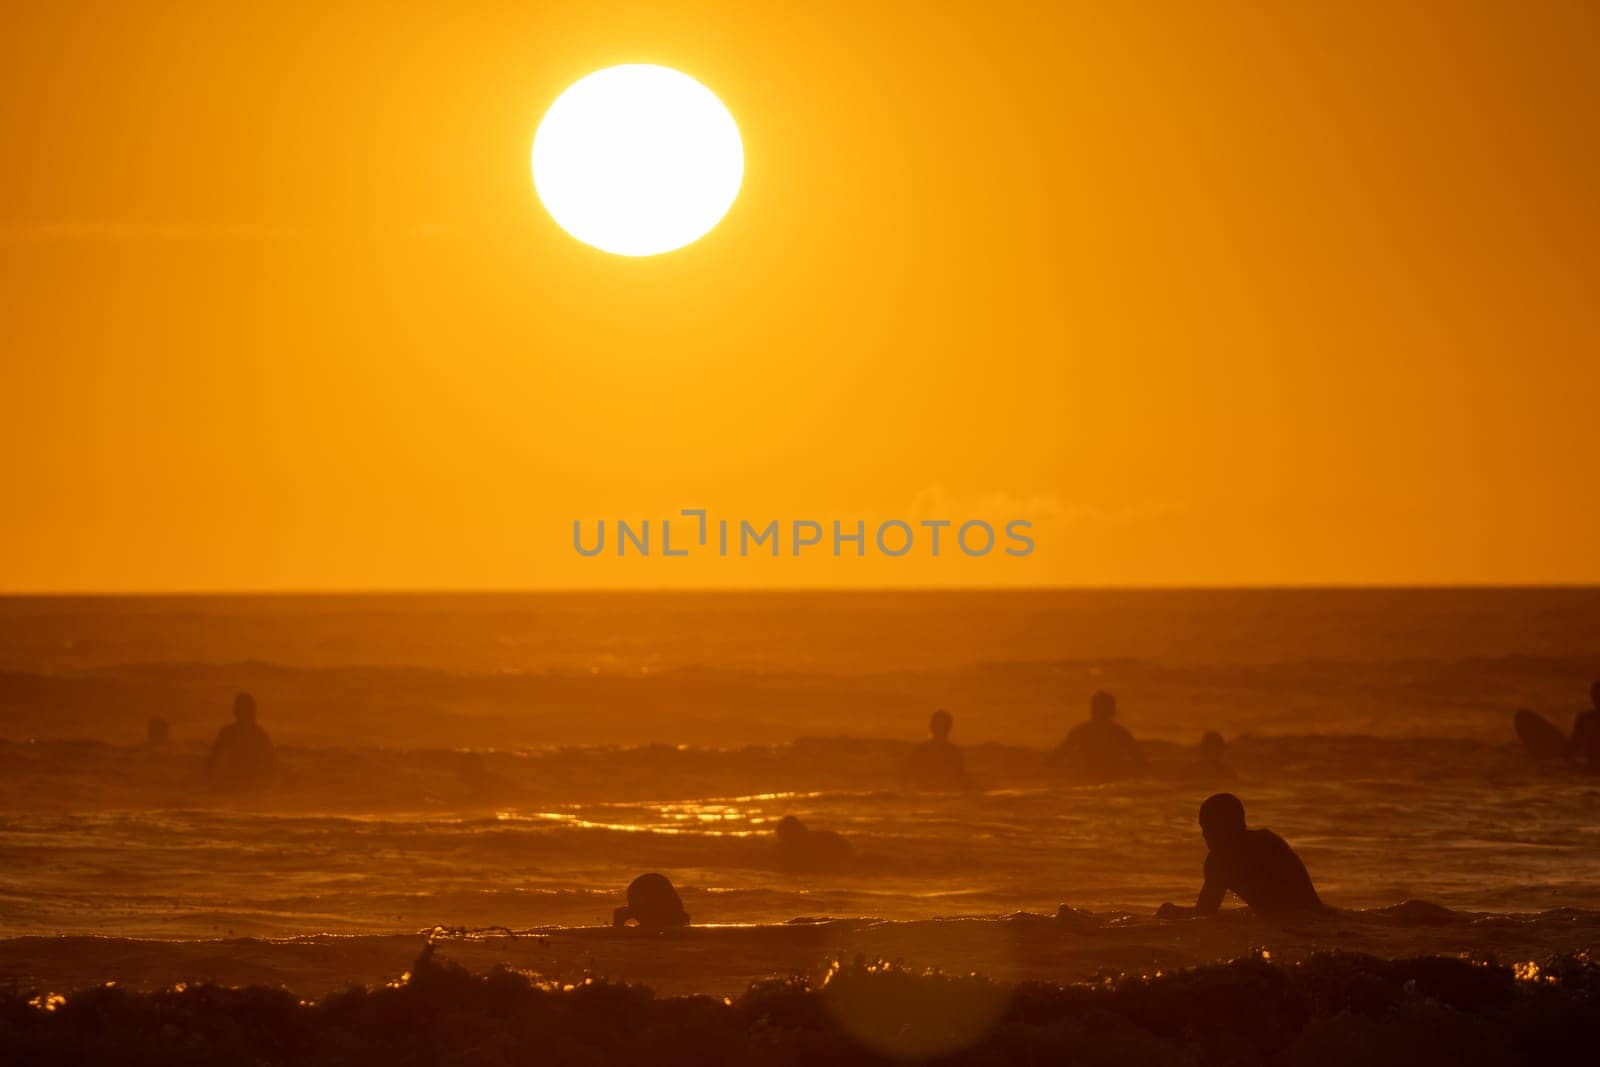 People swimming in the sea at bright orange sunset - huge shining sun. Mid shot